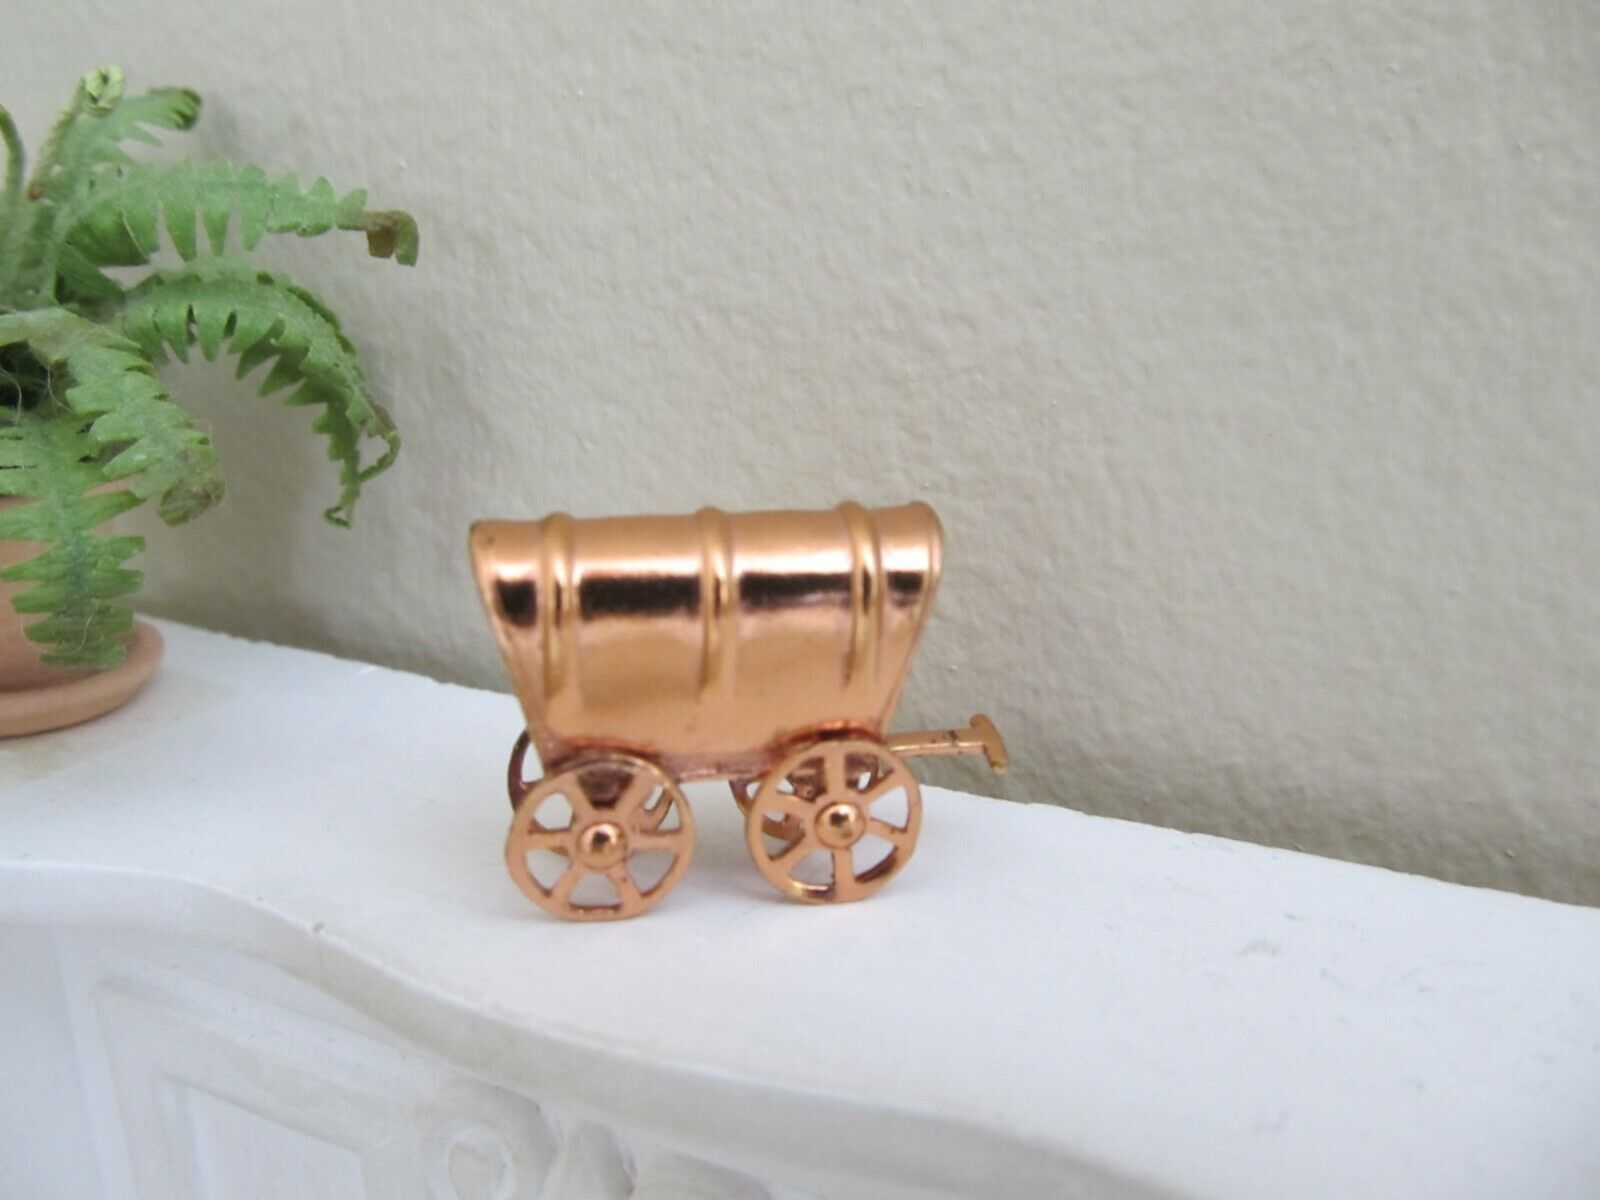 Dollhouse Miniature 1:12 Vintage Tynietoy Copper Covered Wagon Toy Figurine